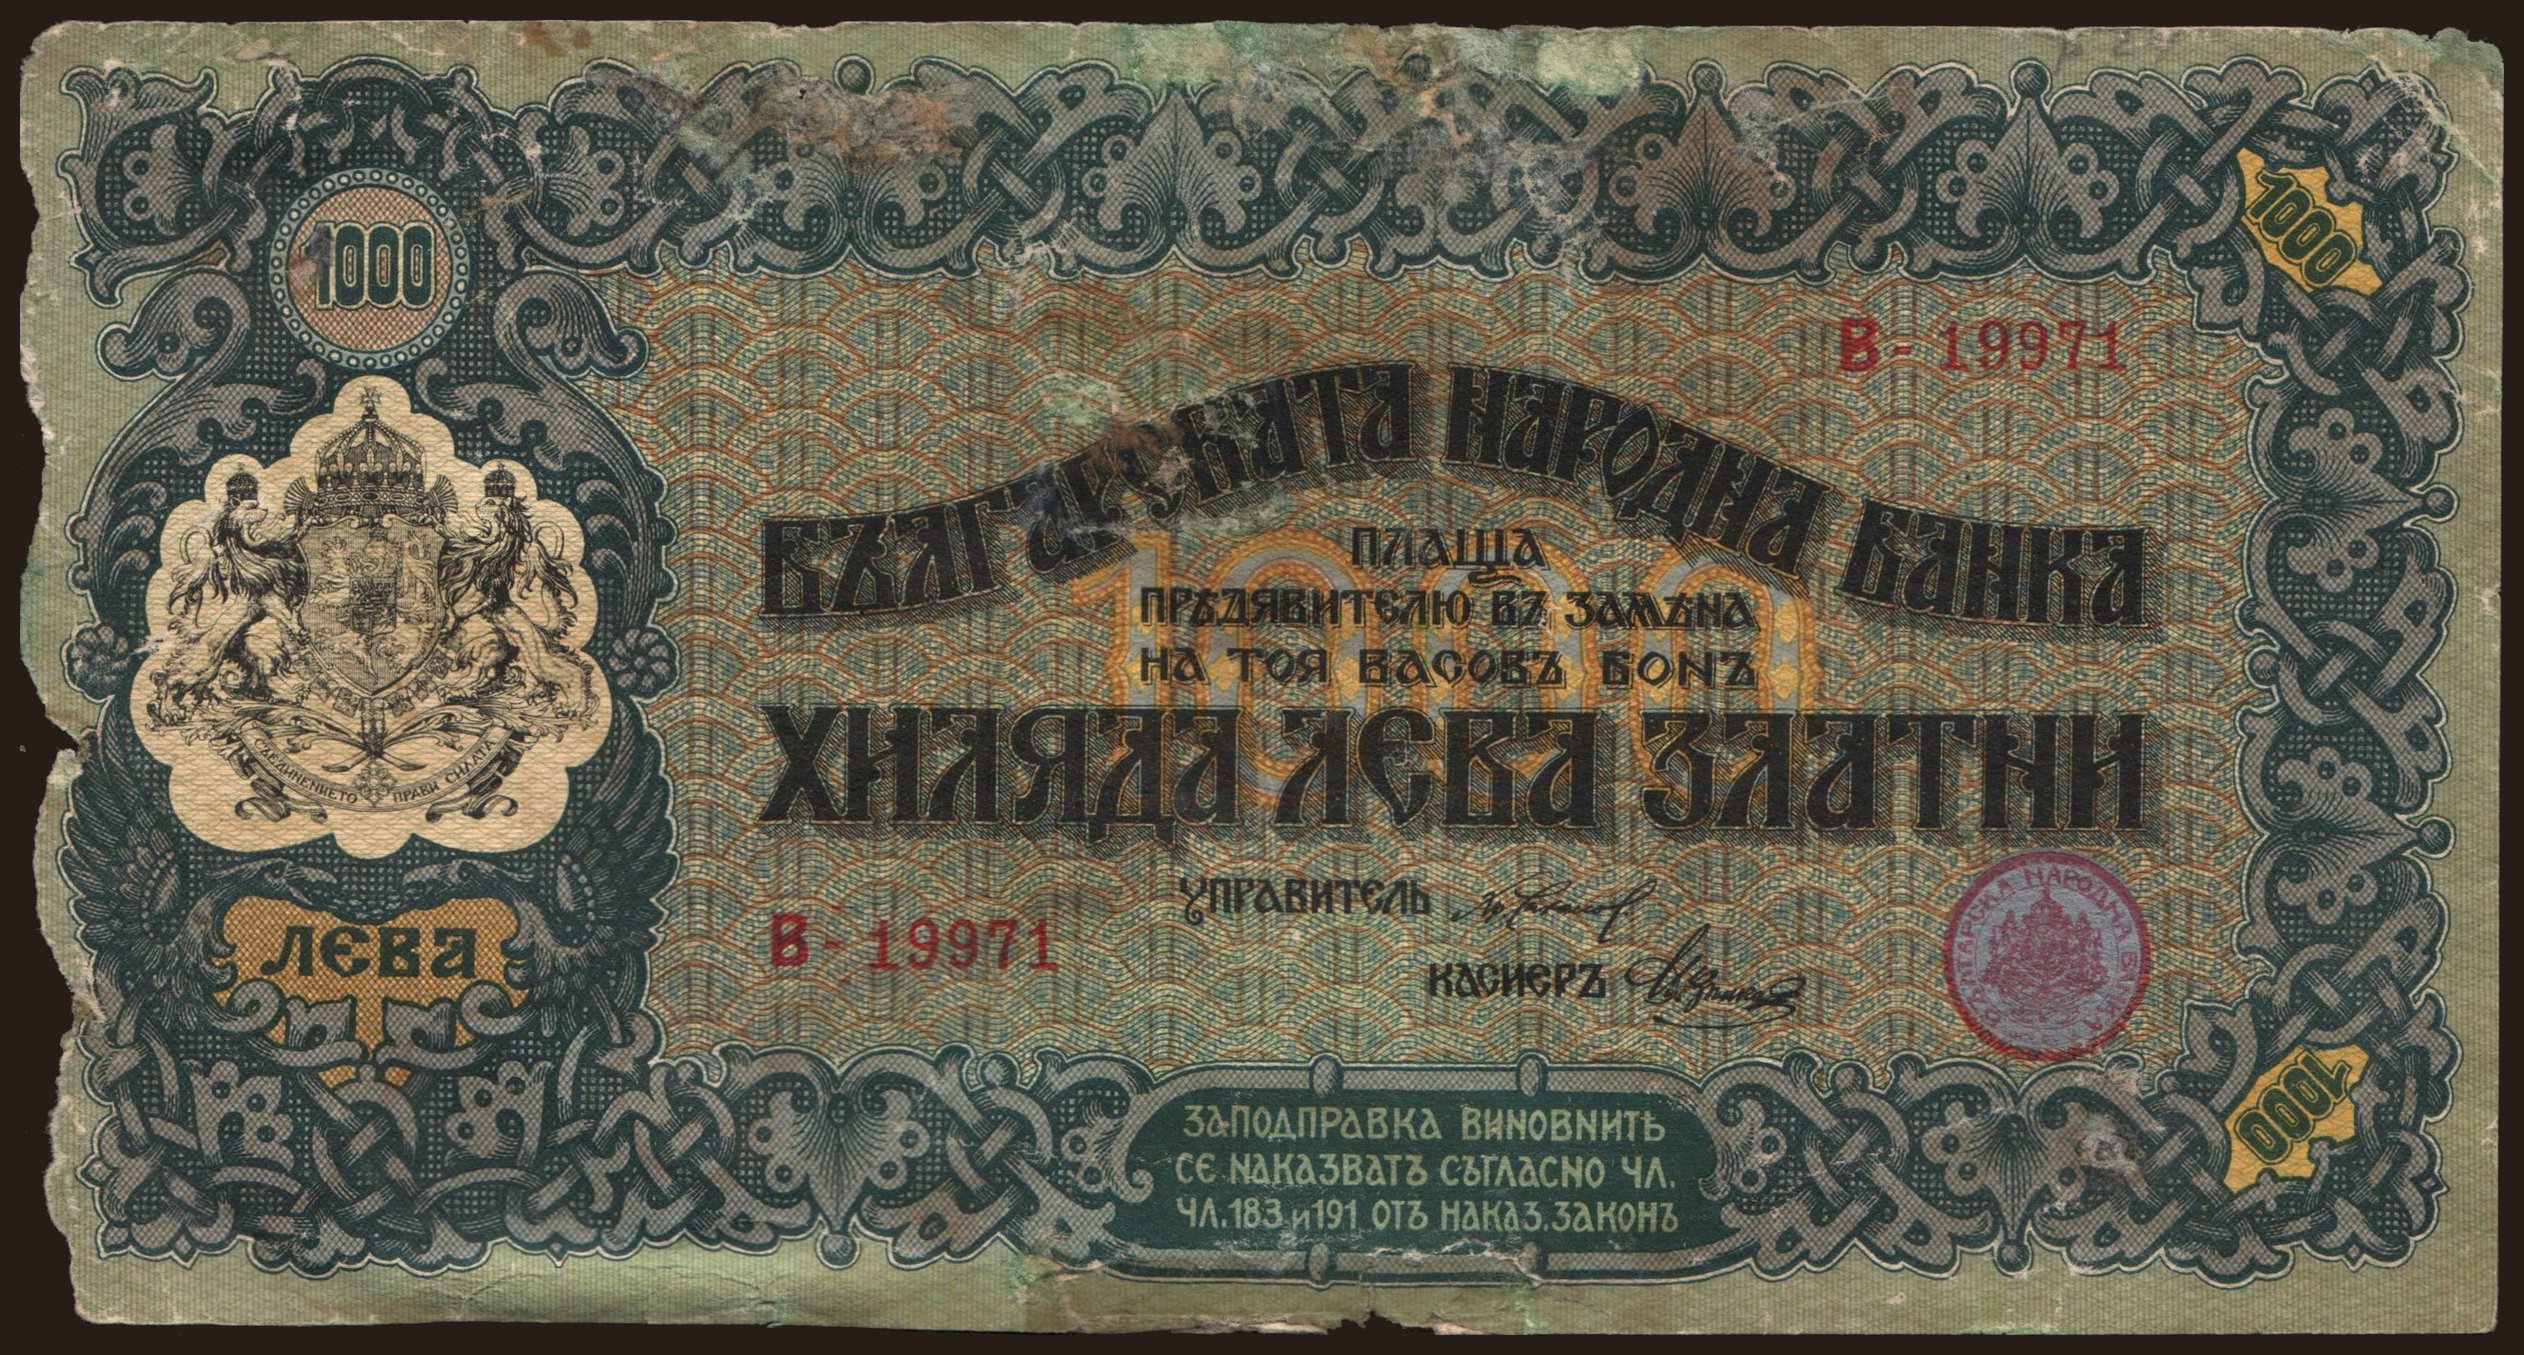 1000 leva, 1918